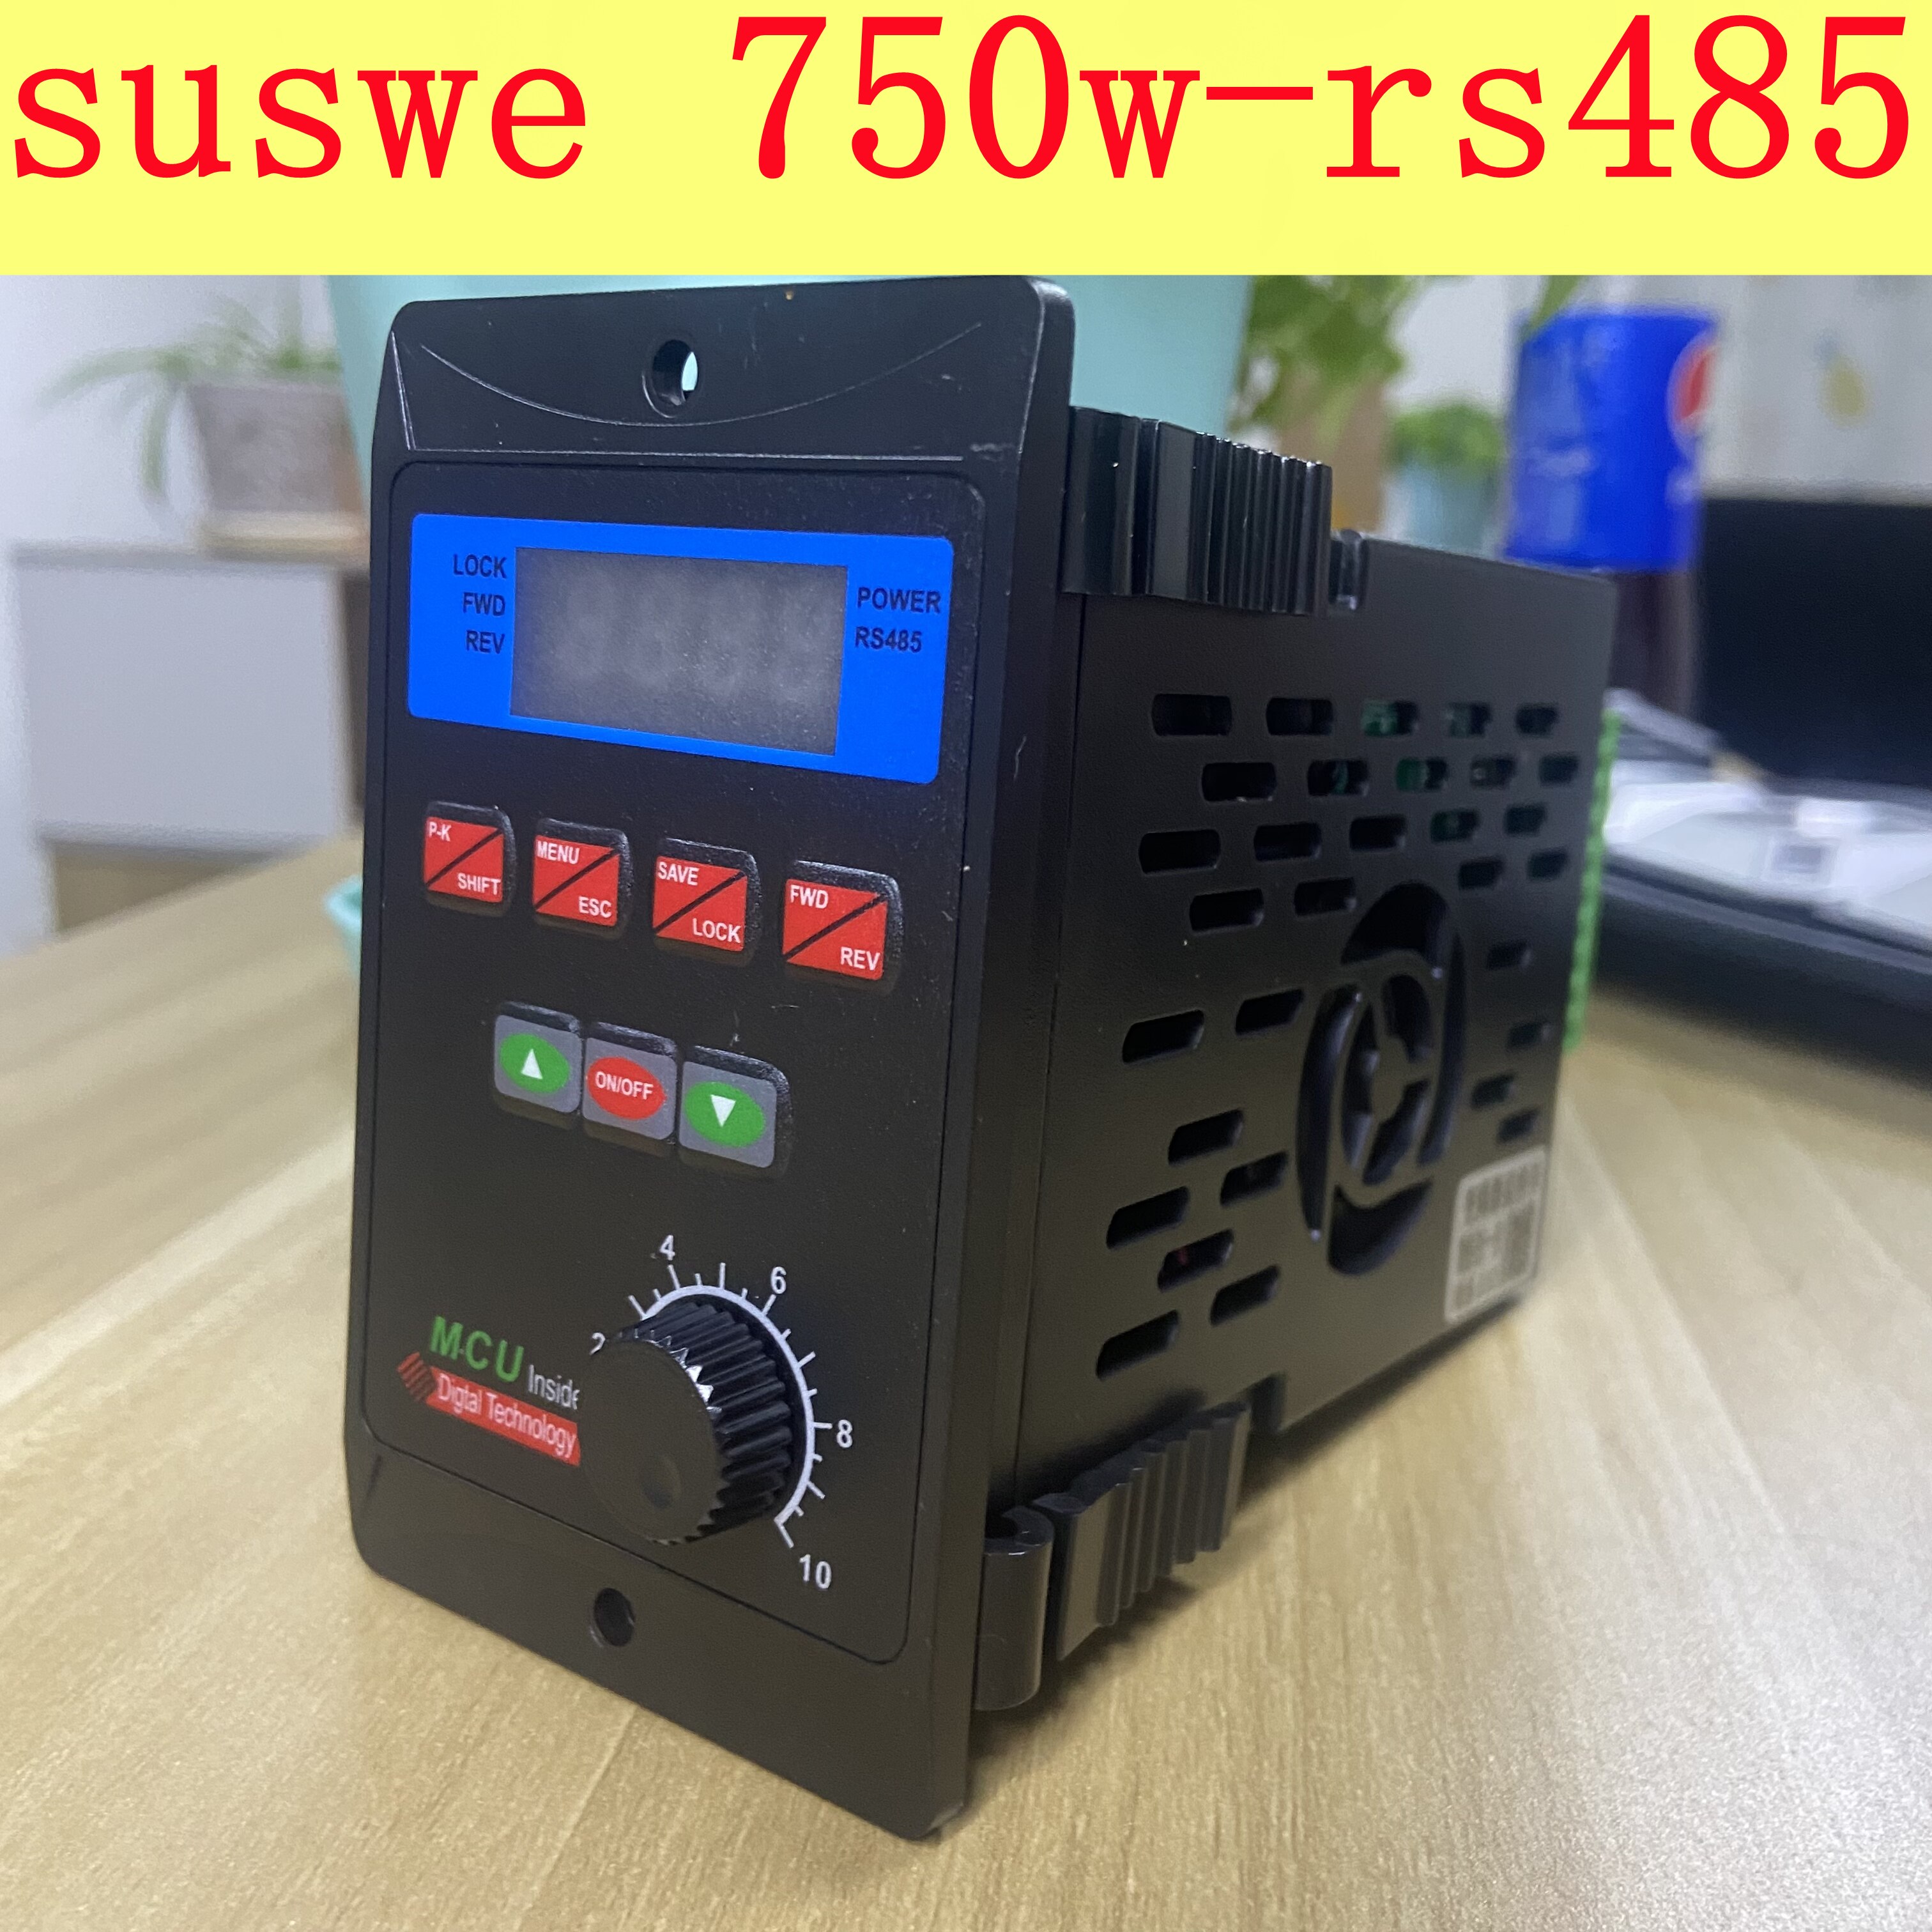 Suswe 810 vfd 750w frekvensomformer add  rs485 220 vsingle phase inp trefaset motordriver enkeltfaset input 0.75kw: Default Title